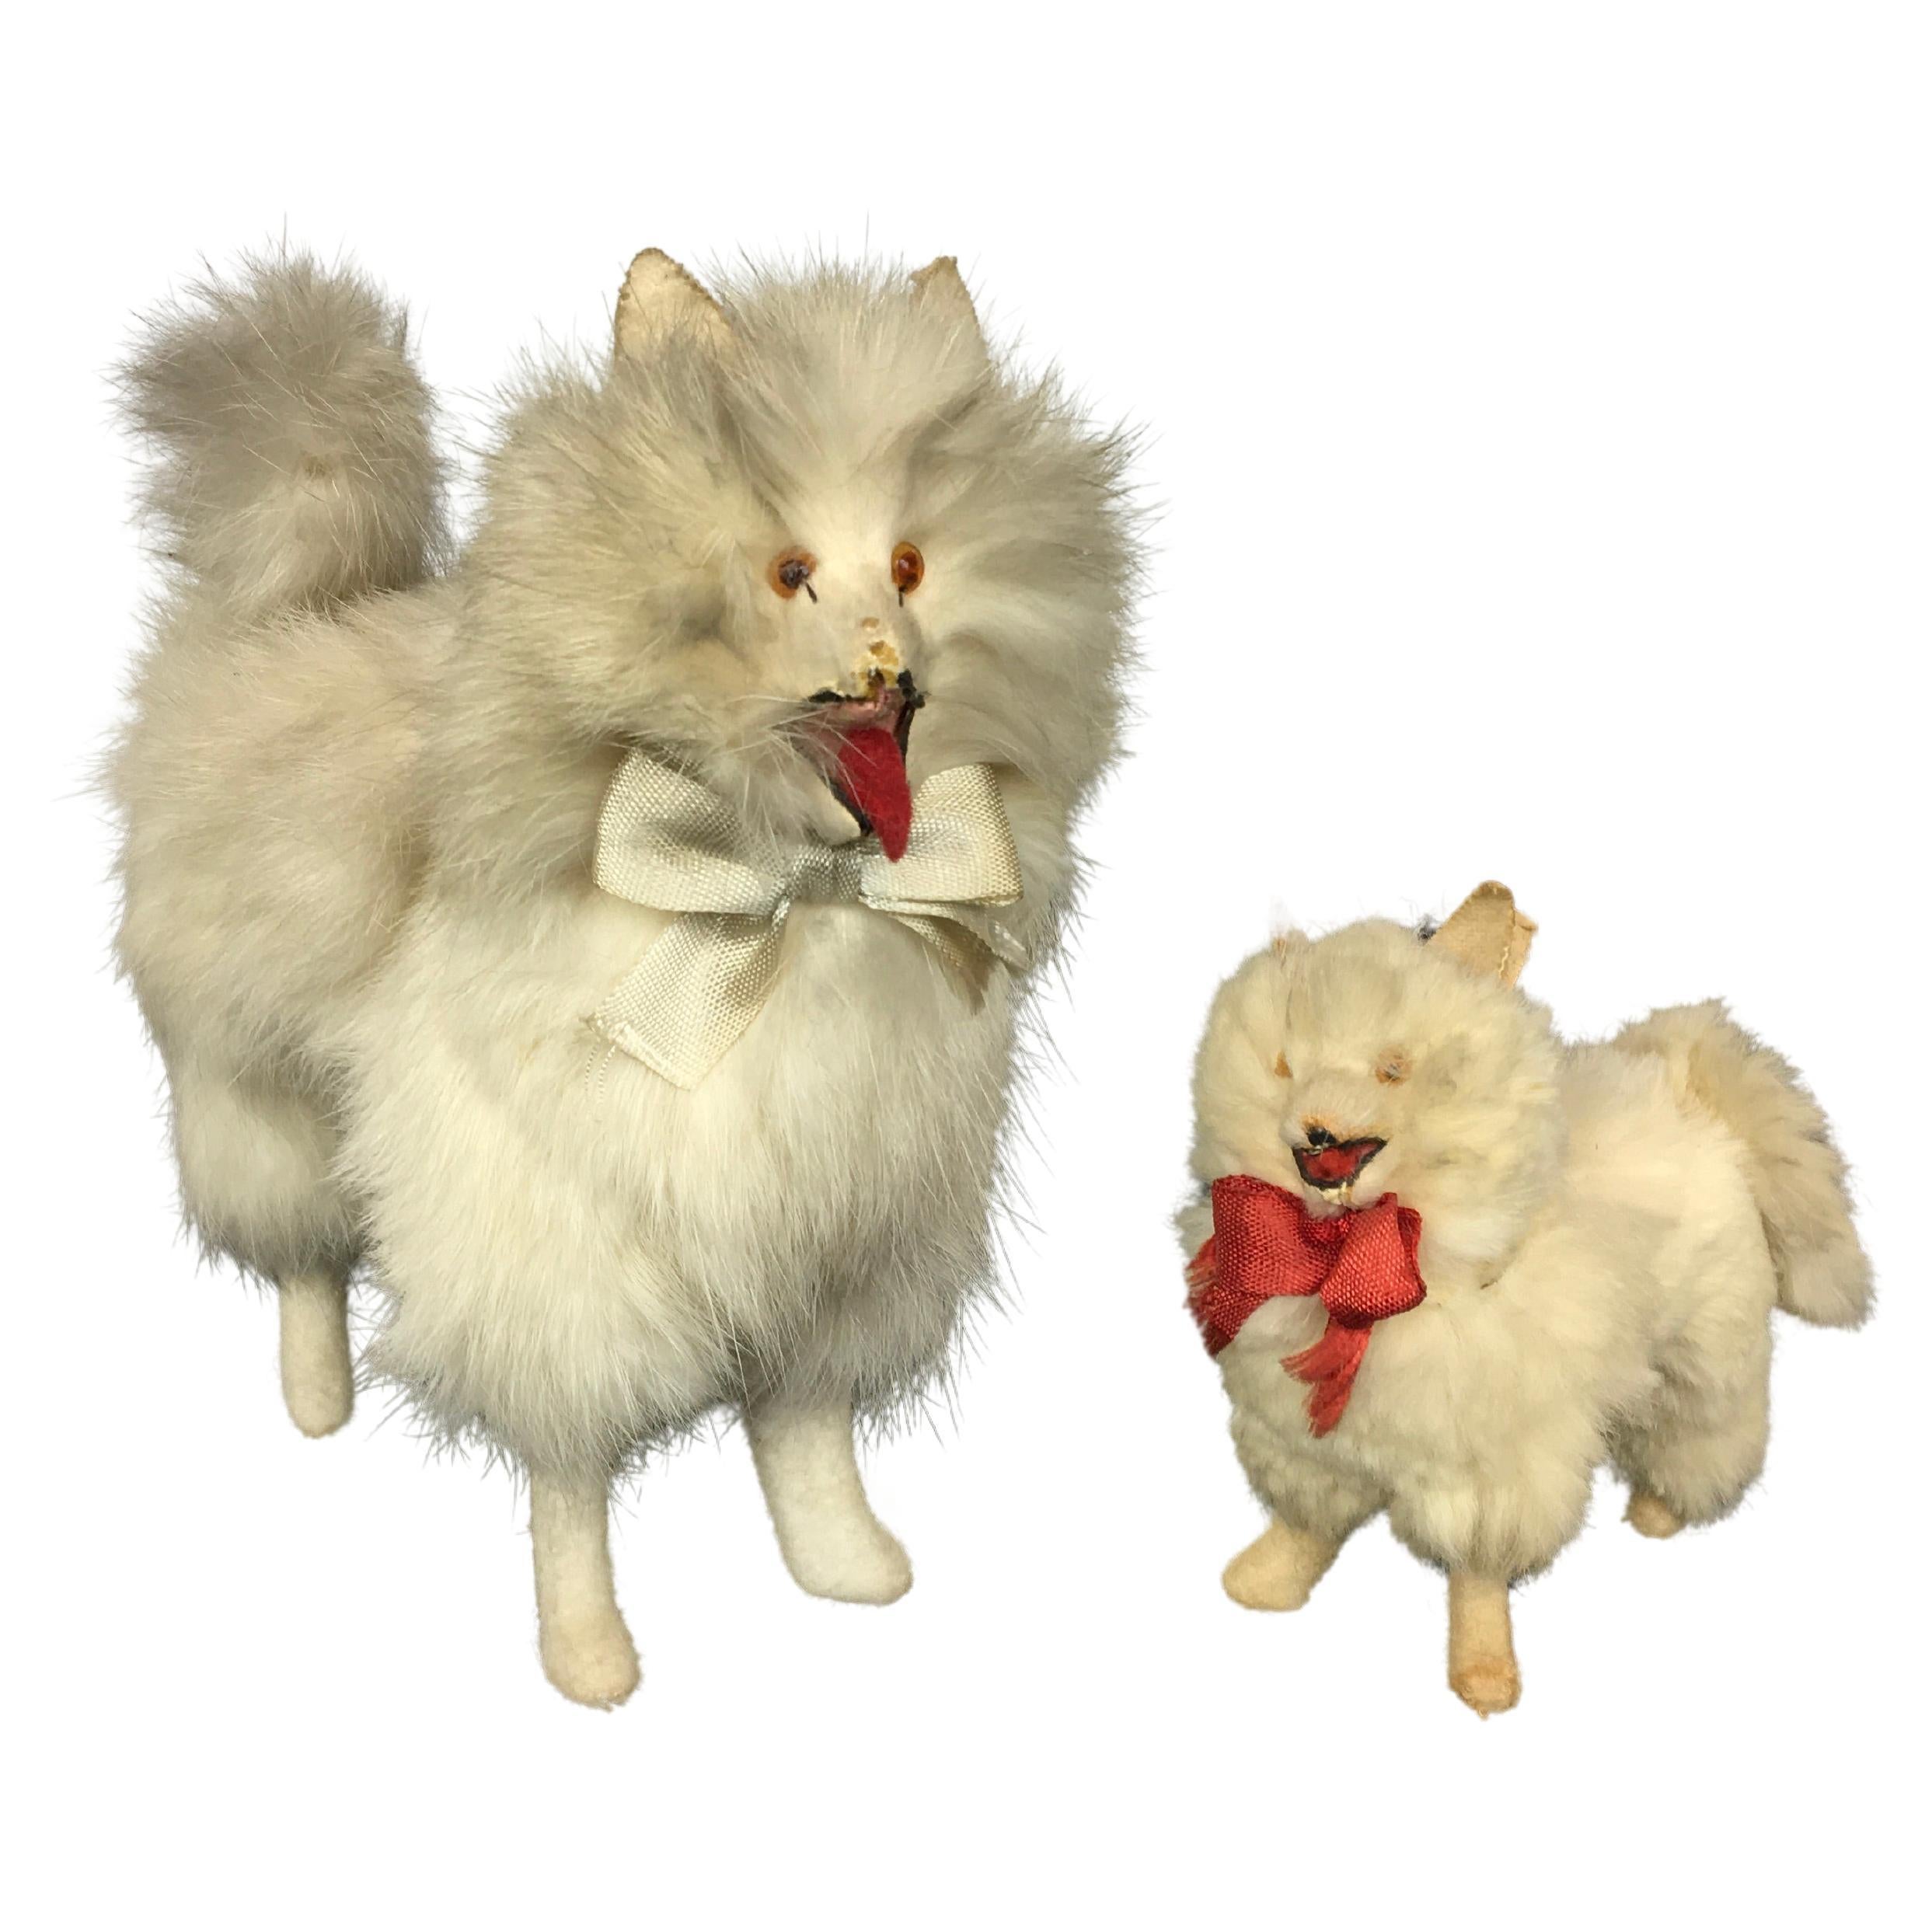 Spitz Pomeranian Salon Dog dolls for Jumeau Doll, Kestner Doll For Sale